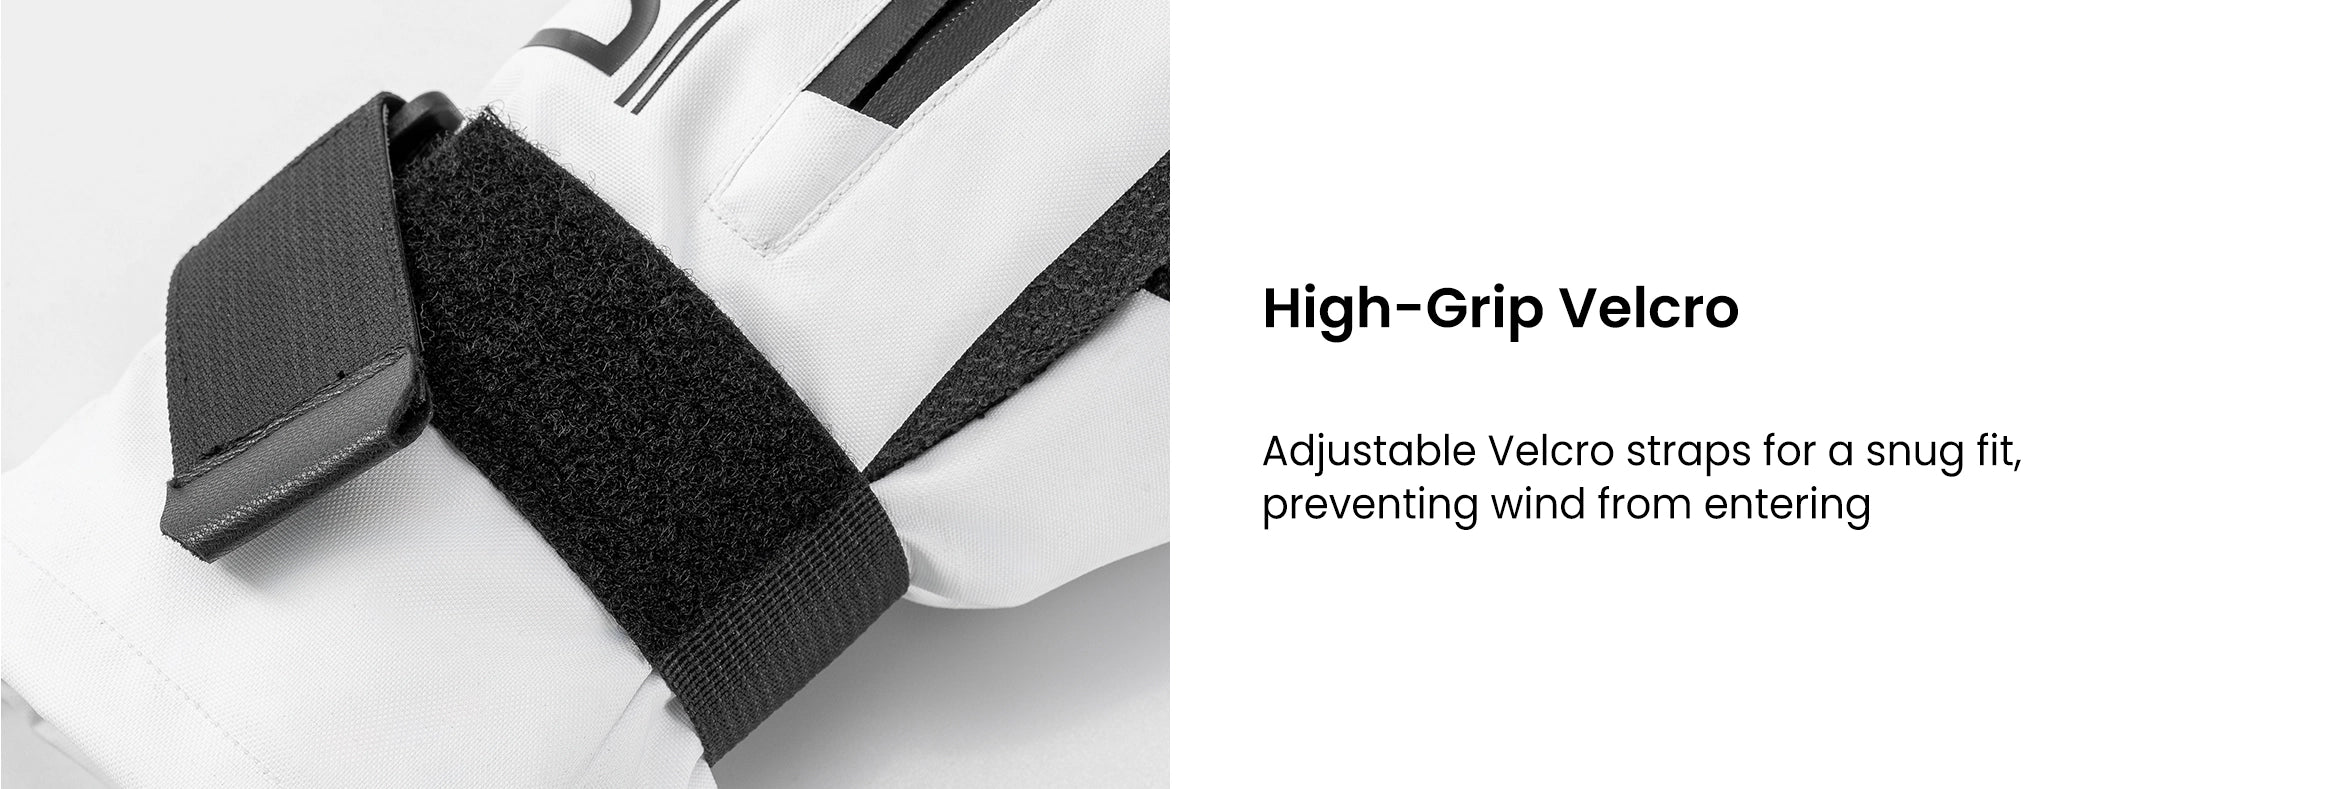 10. High-Grip Velcro